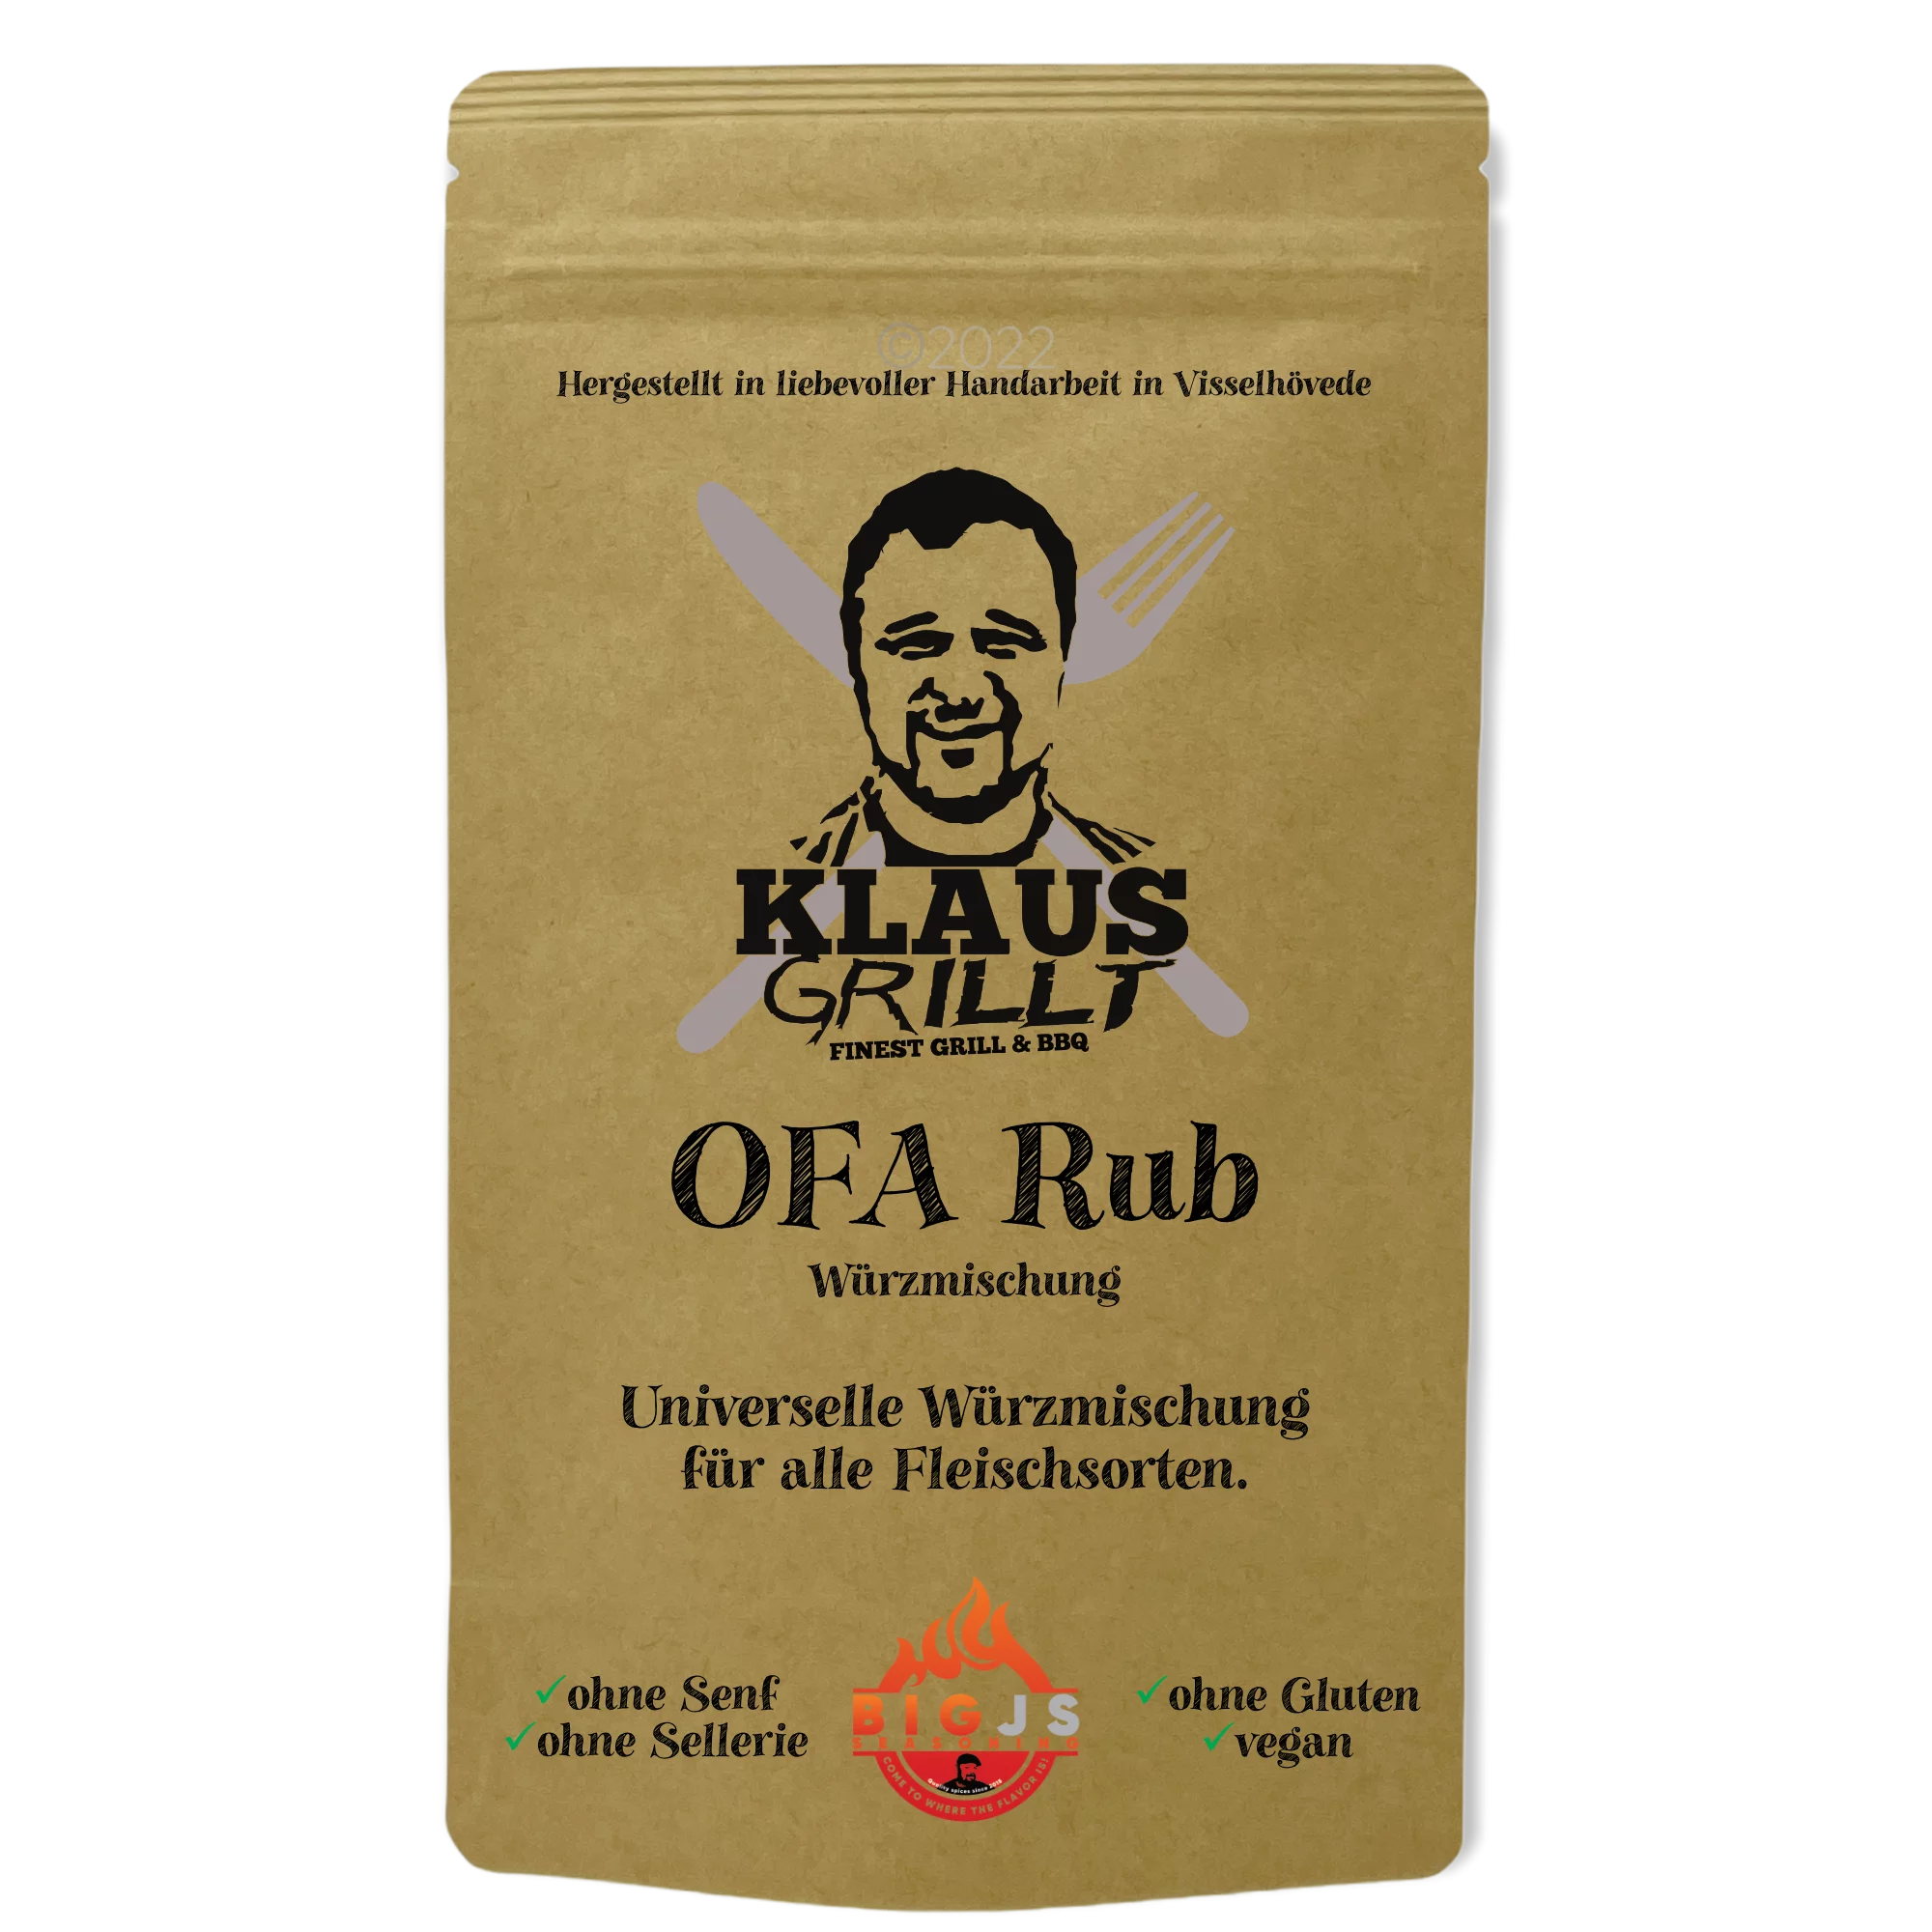 Klaus grillt, OFA Rub - One For All, 250g Standbeutel